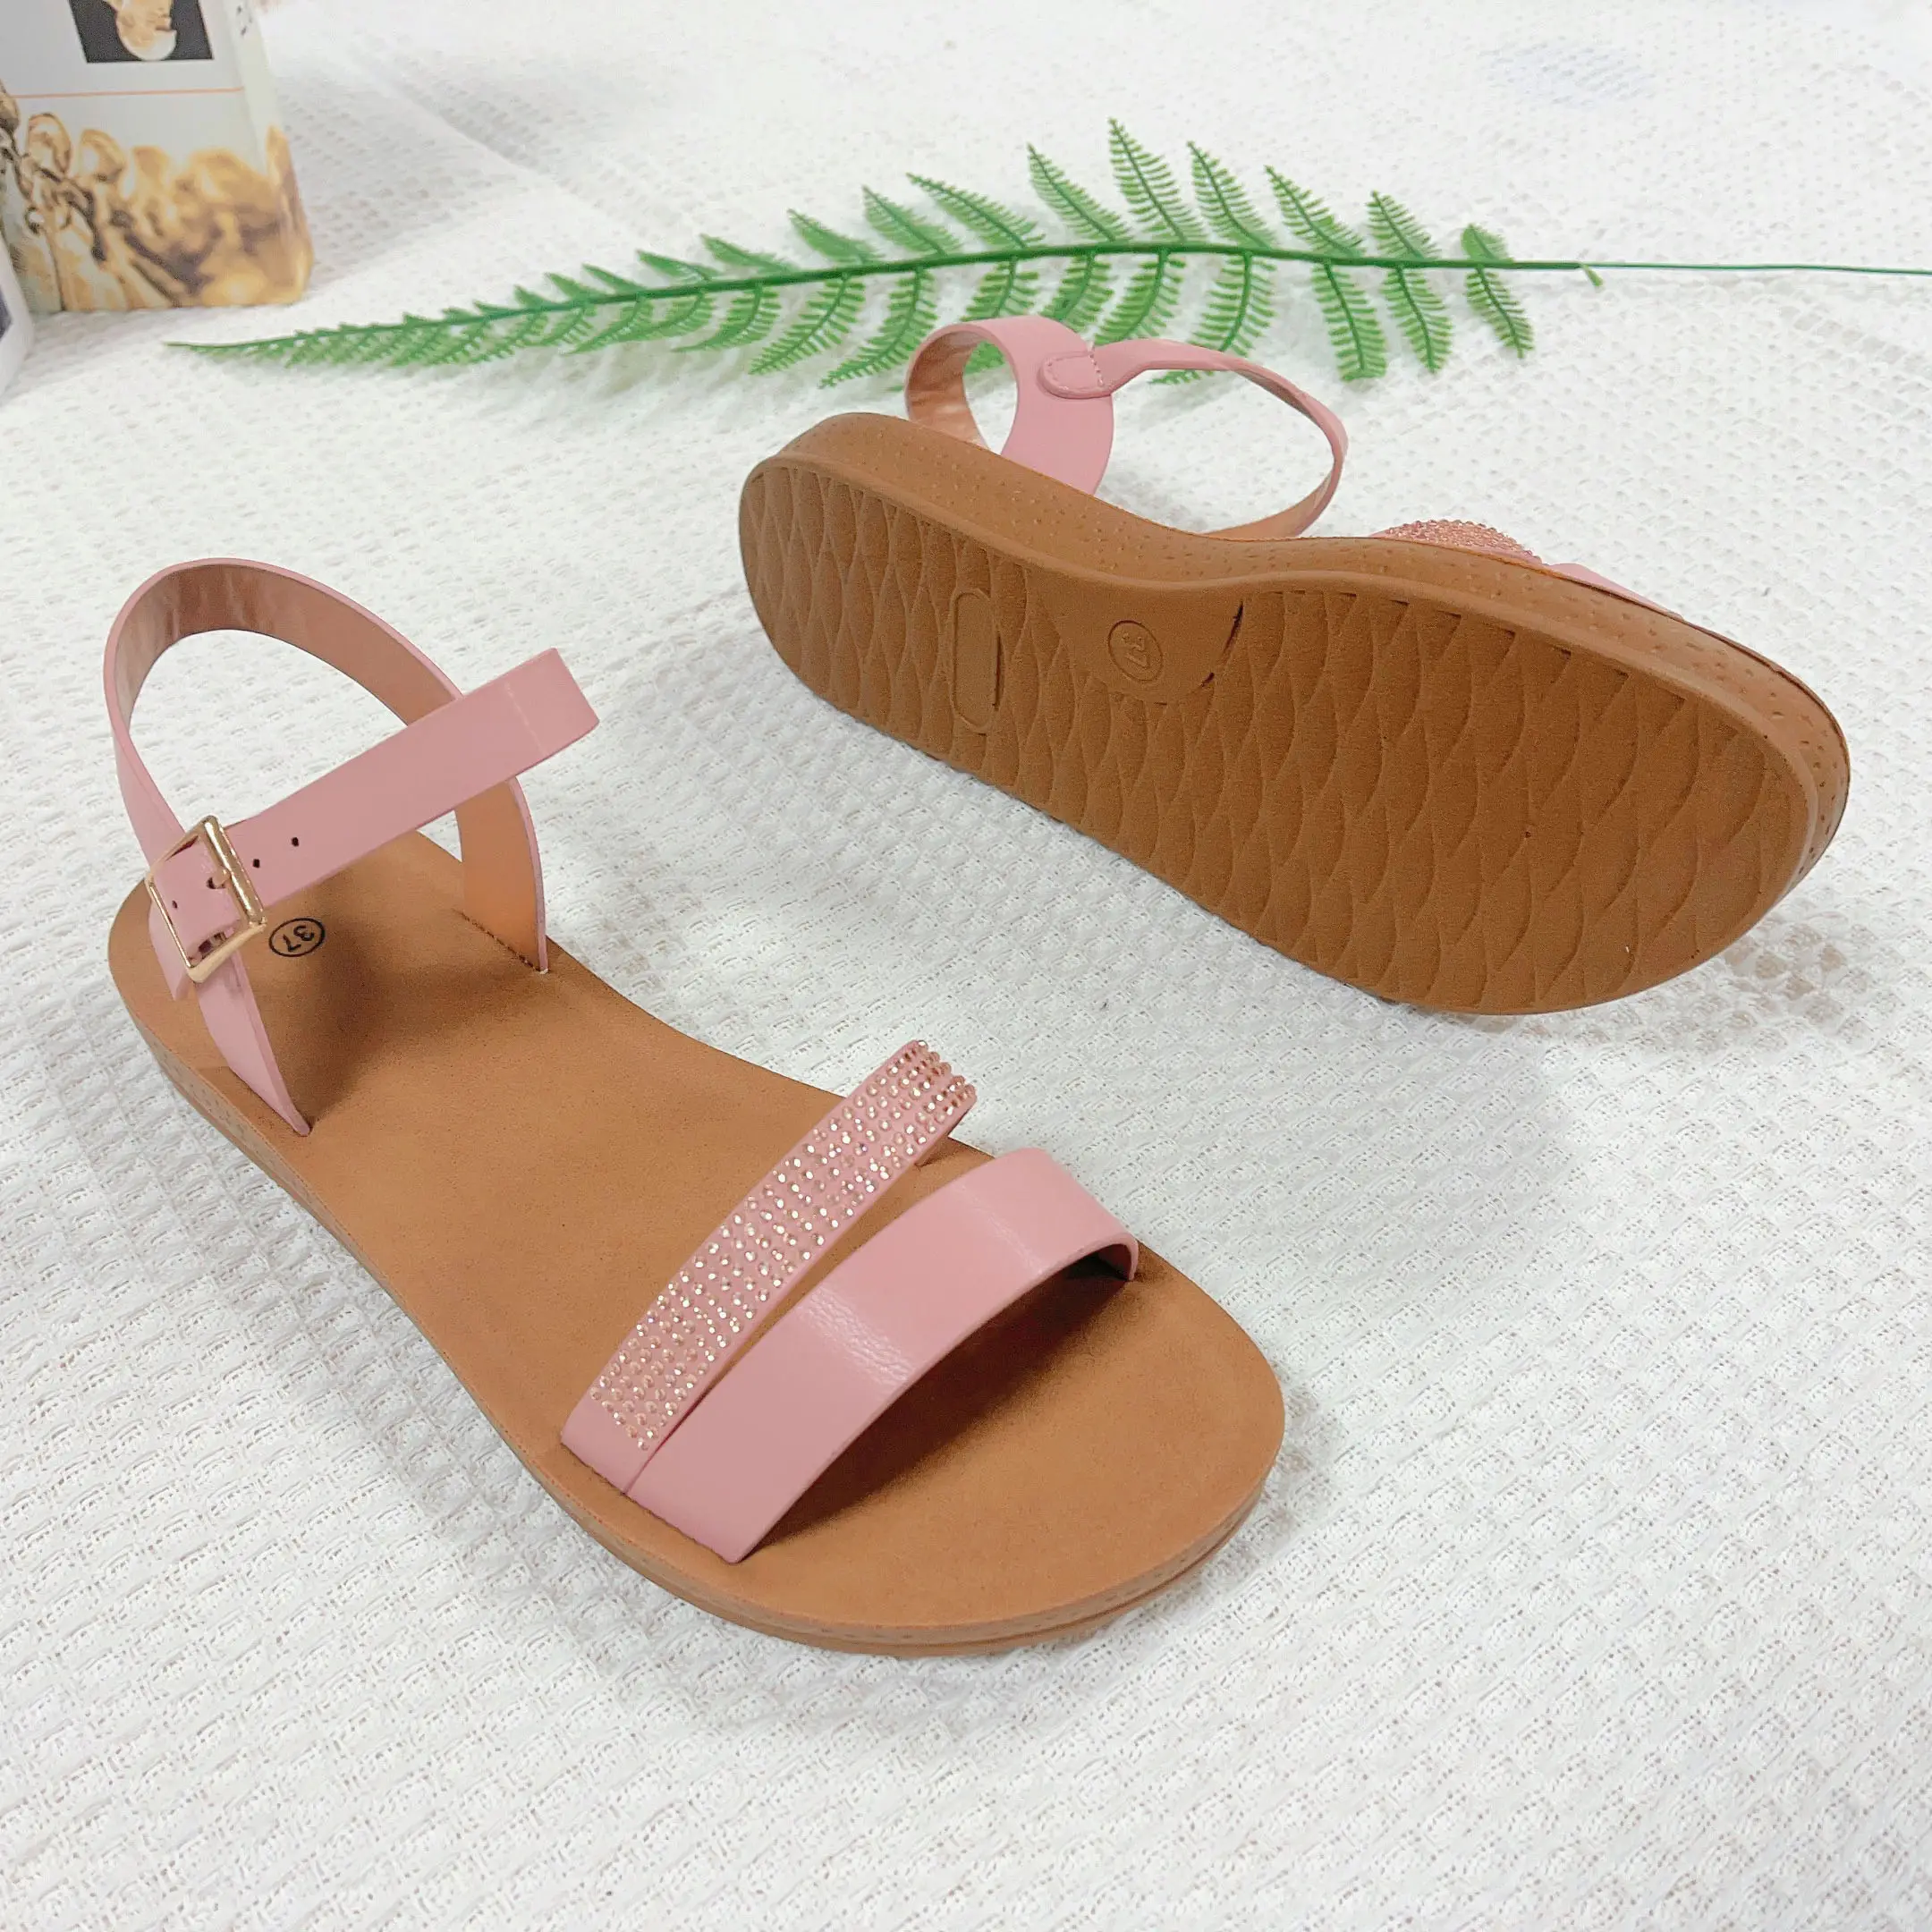 natural summer rattan flat sandals slipper sandals flat woman luxury famous brand beach flat slippers sandals causal shoes